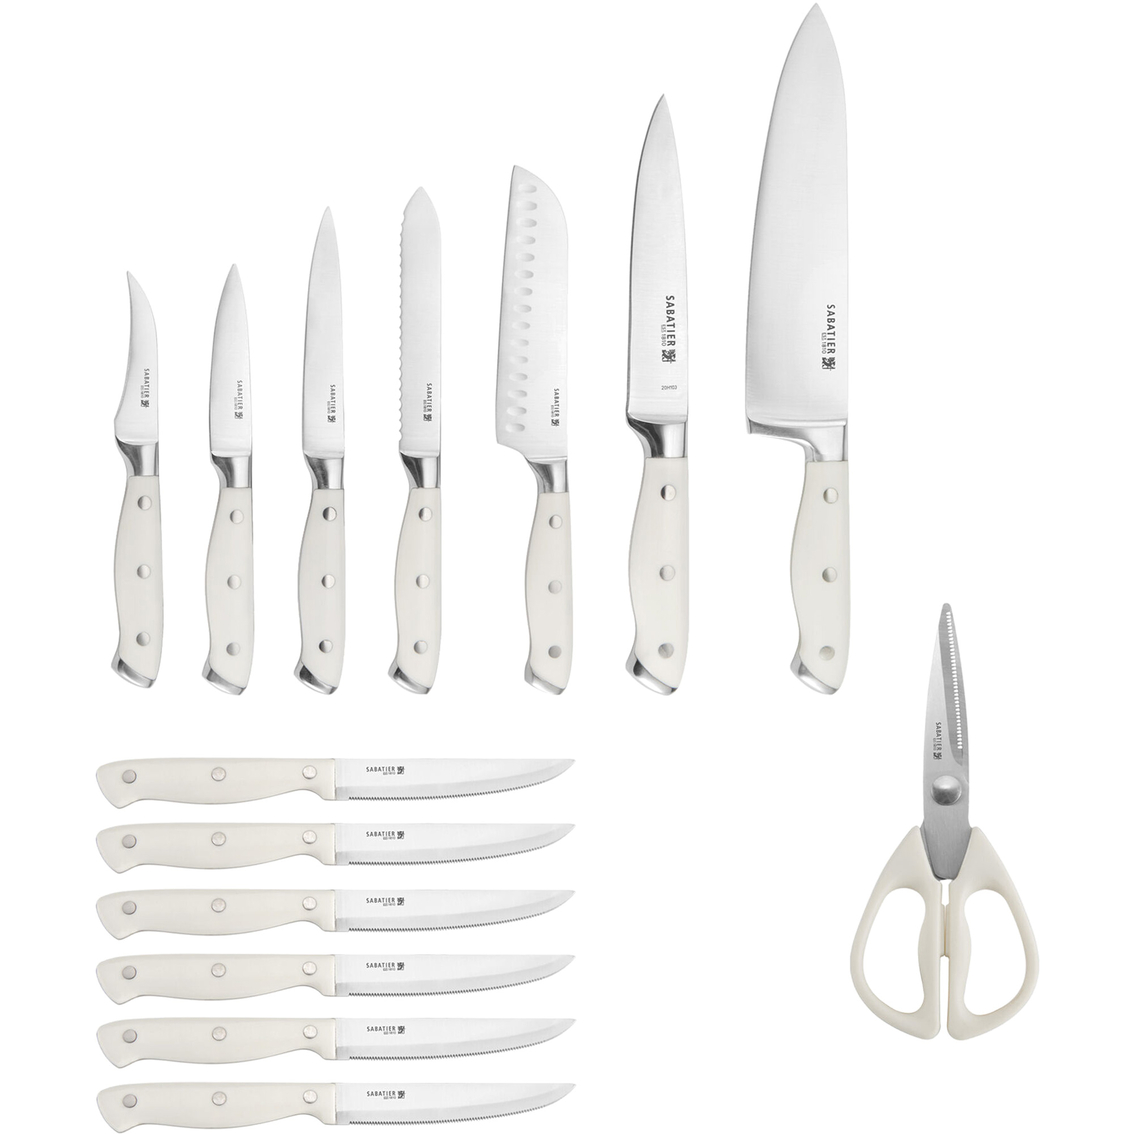 Sabatier 15 Pc. Knife Block Set With Built In Sharpener, Cutlery, Household